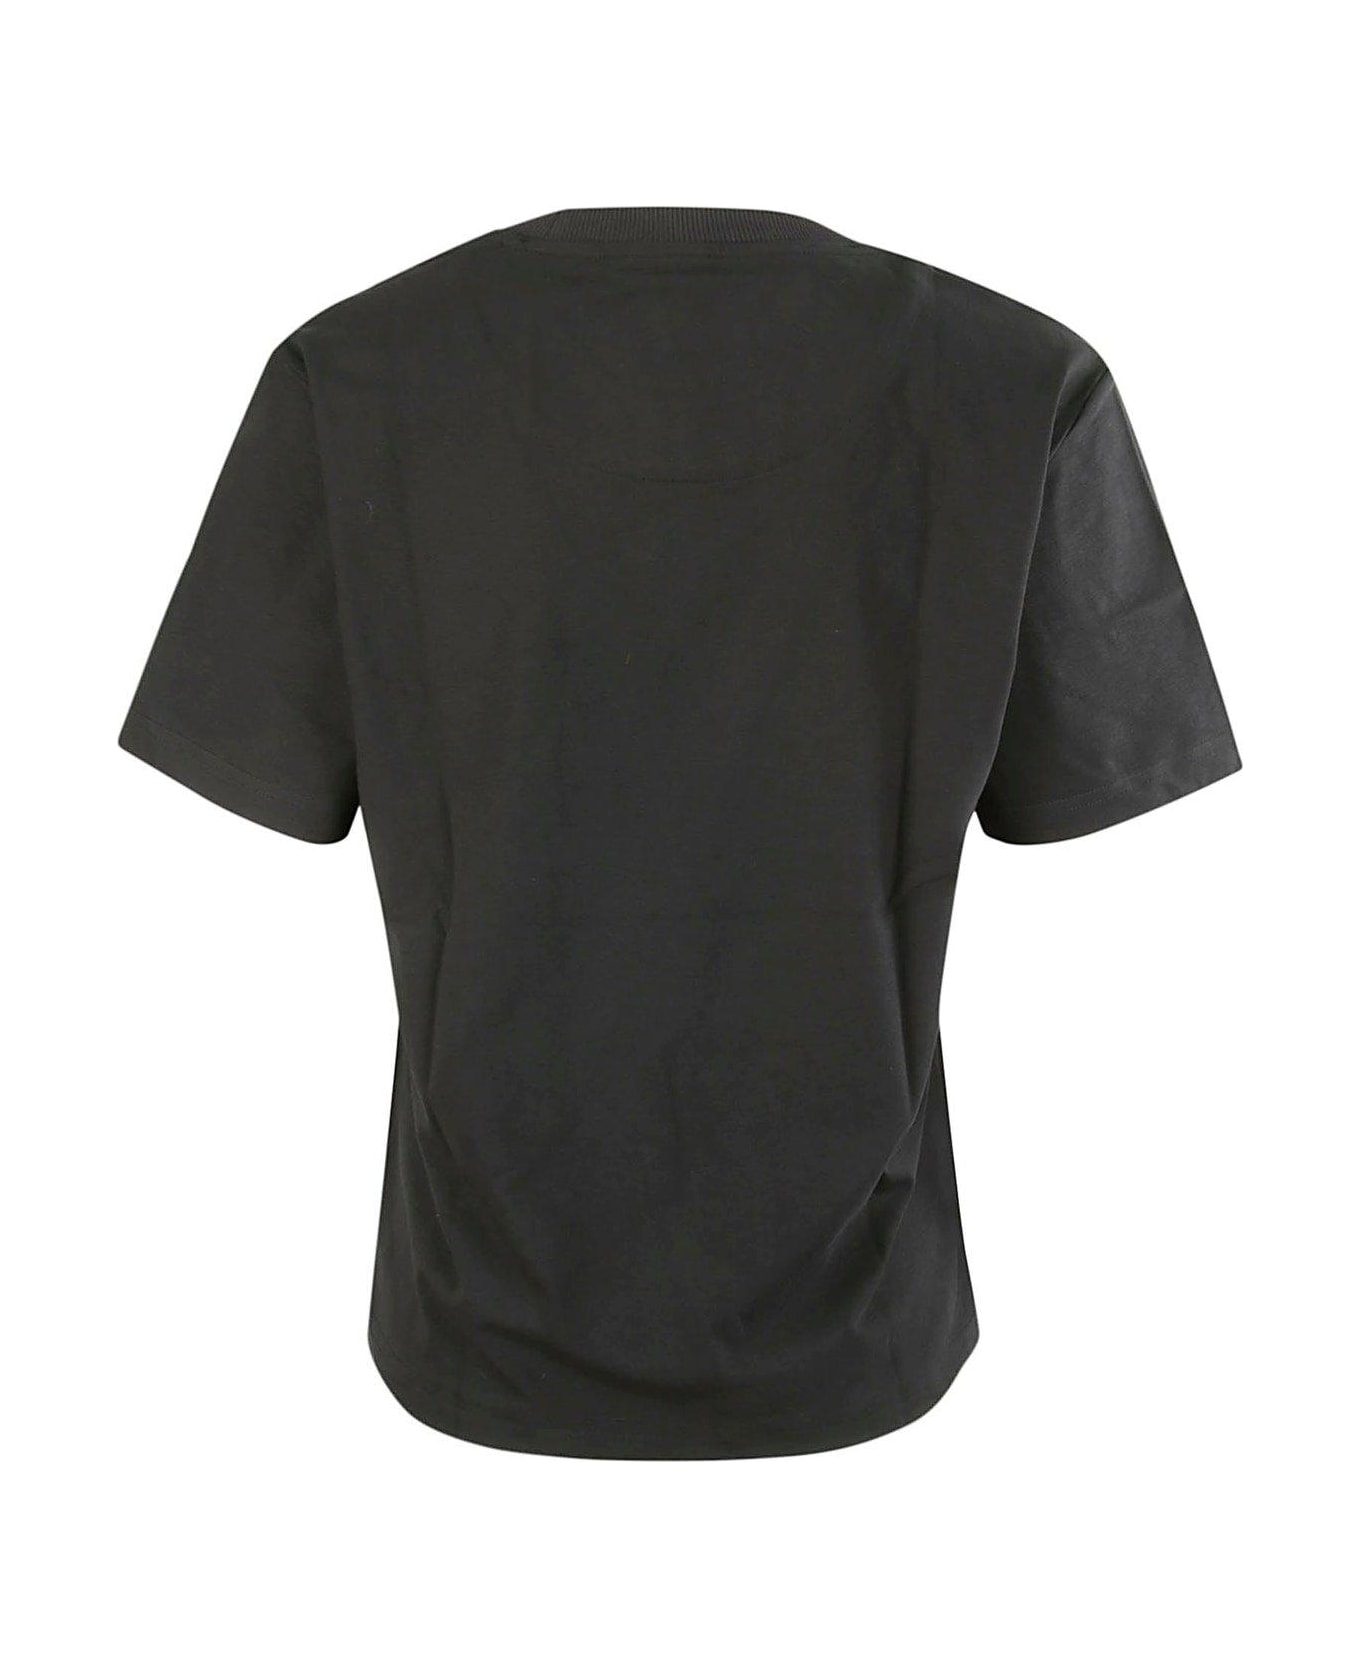 Adidas by Stella McCartney Truecasuals Crewneck T-shirt - Black